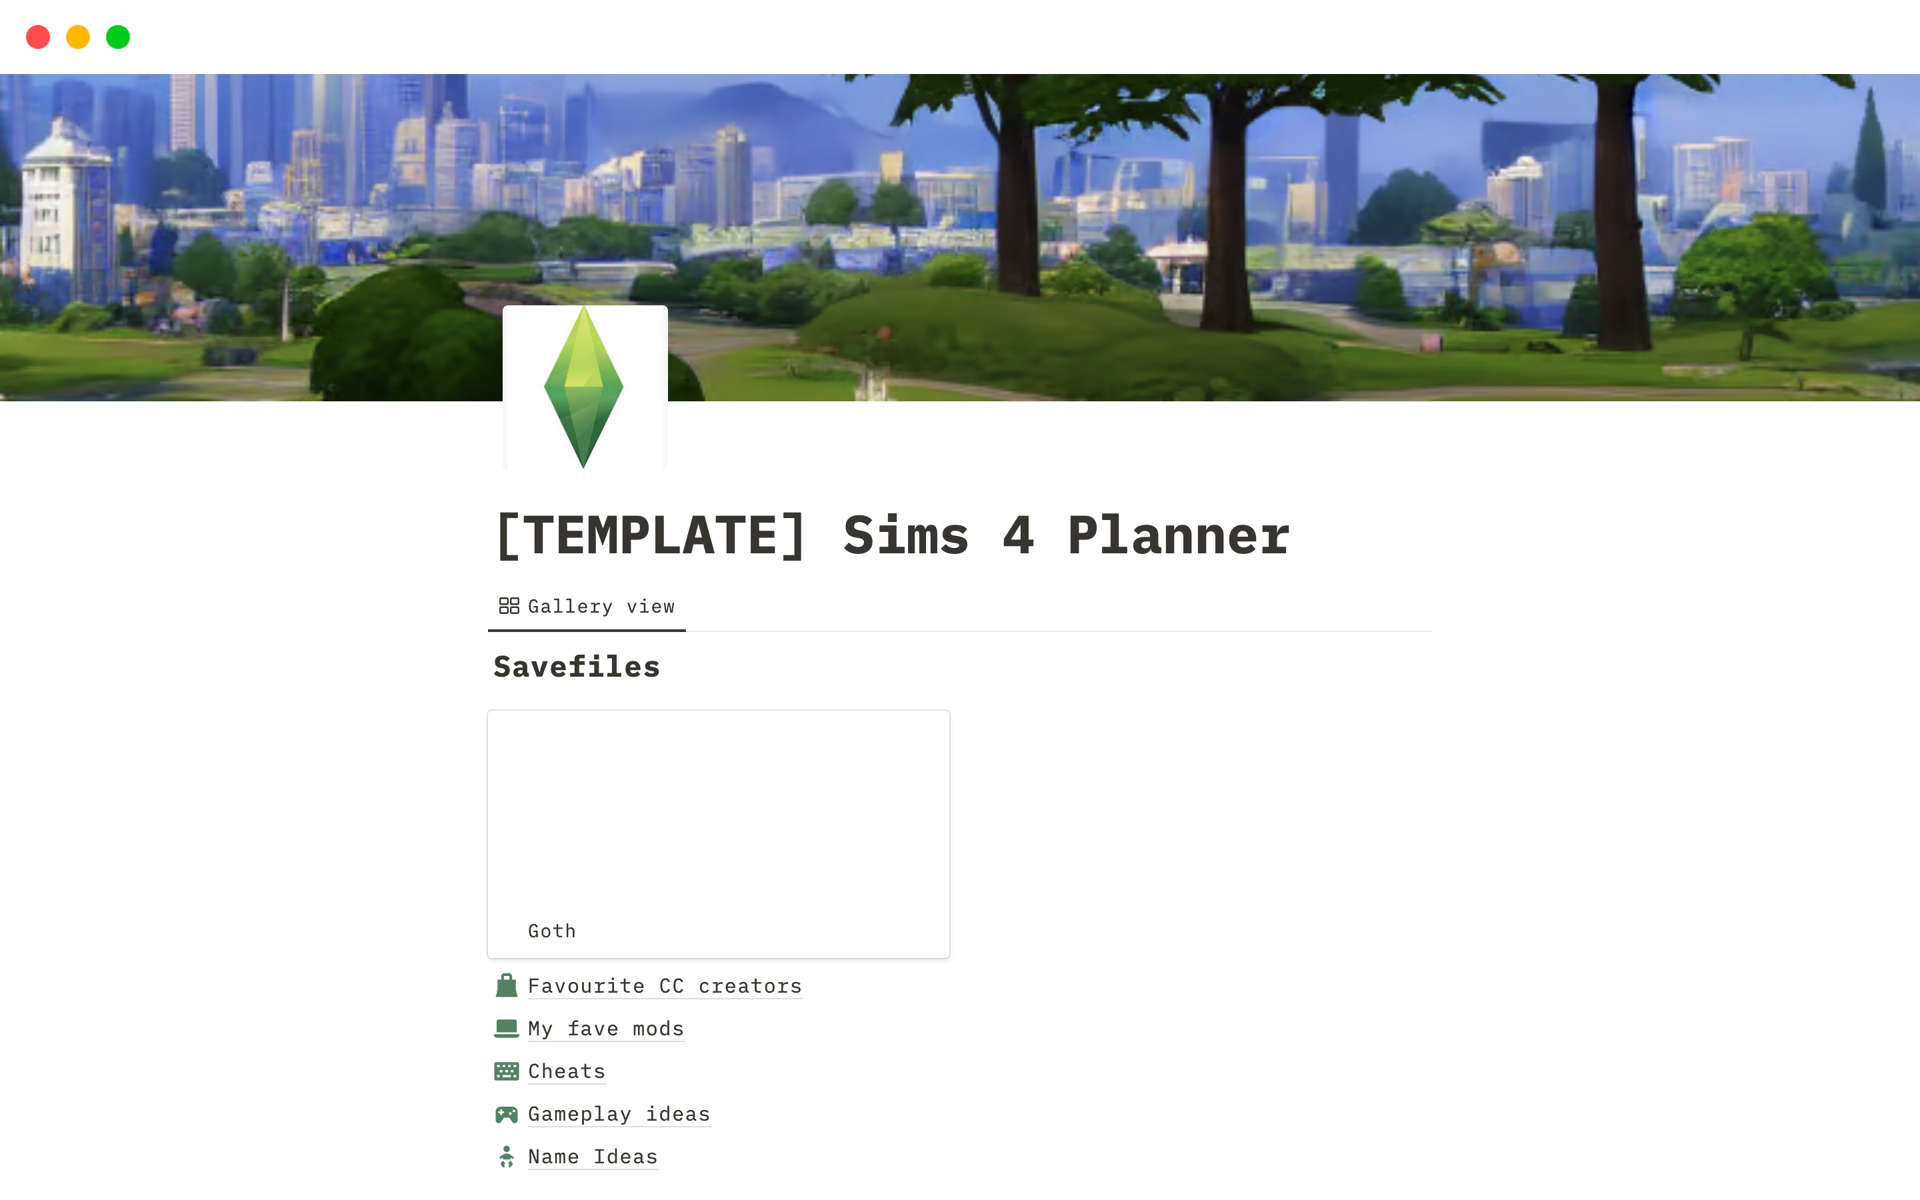 Sims 4 Planner님의 템플릿 미리보기